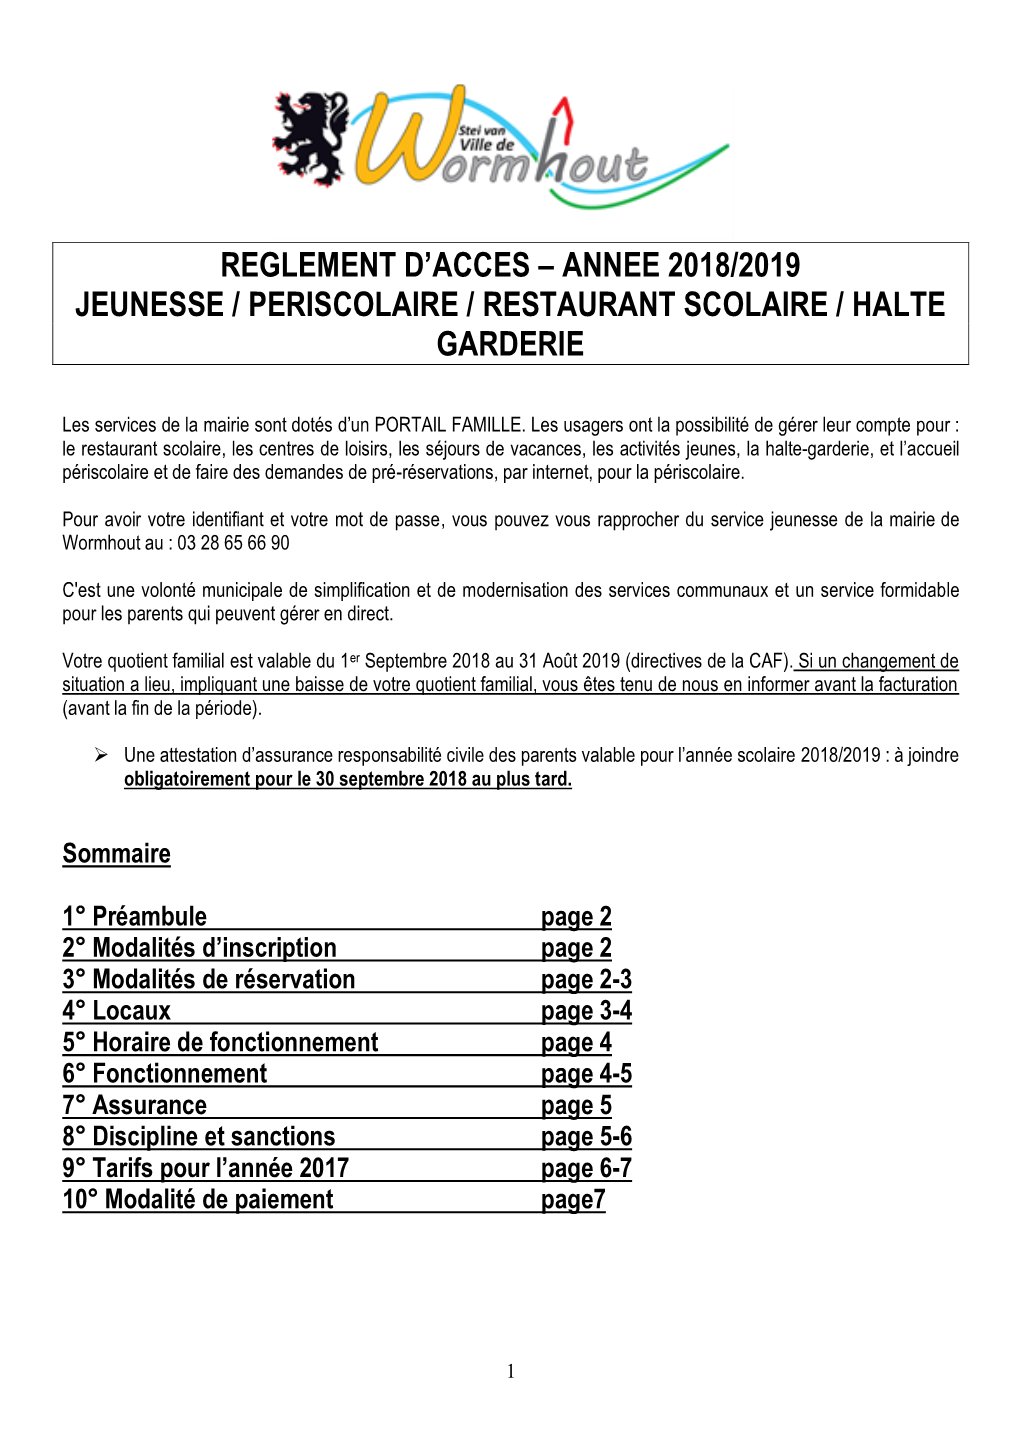 Annee 2018/2019 Jeunesse / Periscolaire / Restaurant Scolaire / Halte Garderie